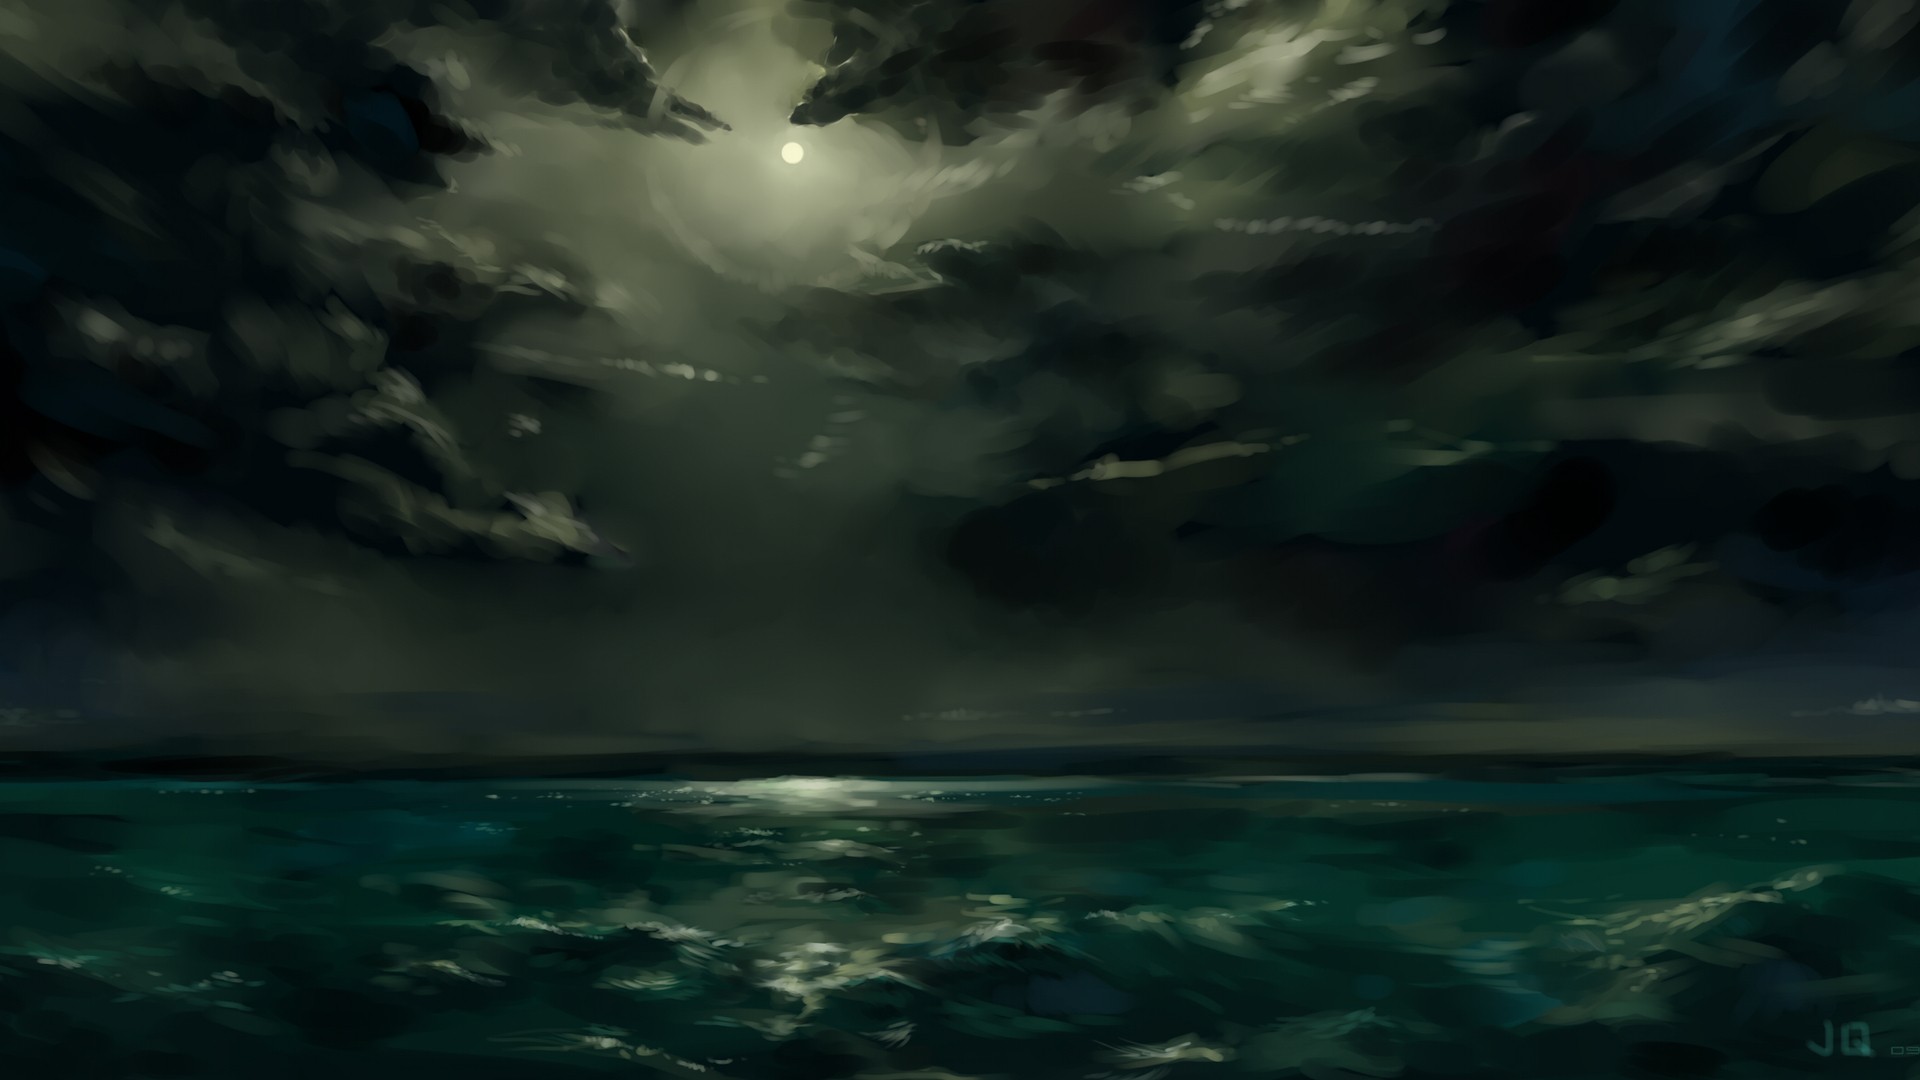 General 1920x1080 clouds artwork digital art nature landscape sea sky night dark